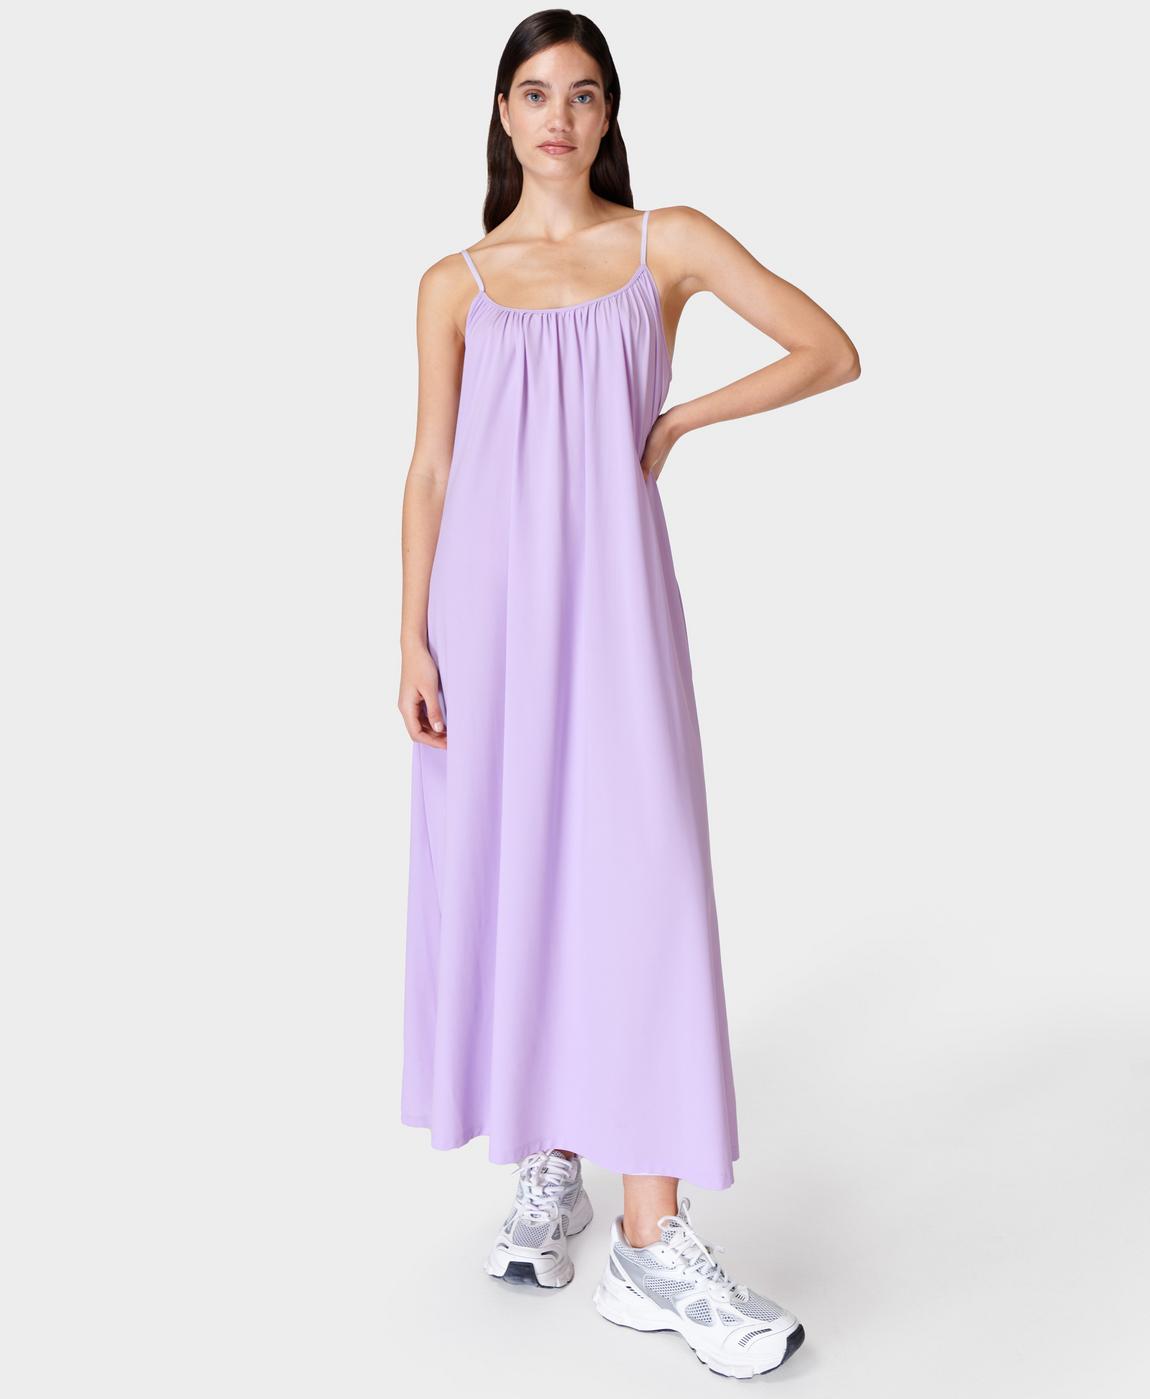 Explorer Strappy Summer Dress - lavenderpurple | Women's Dresses and ...